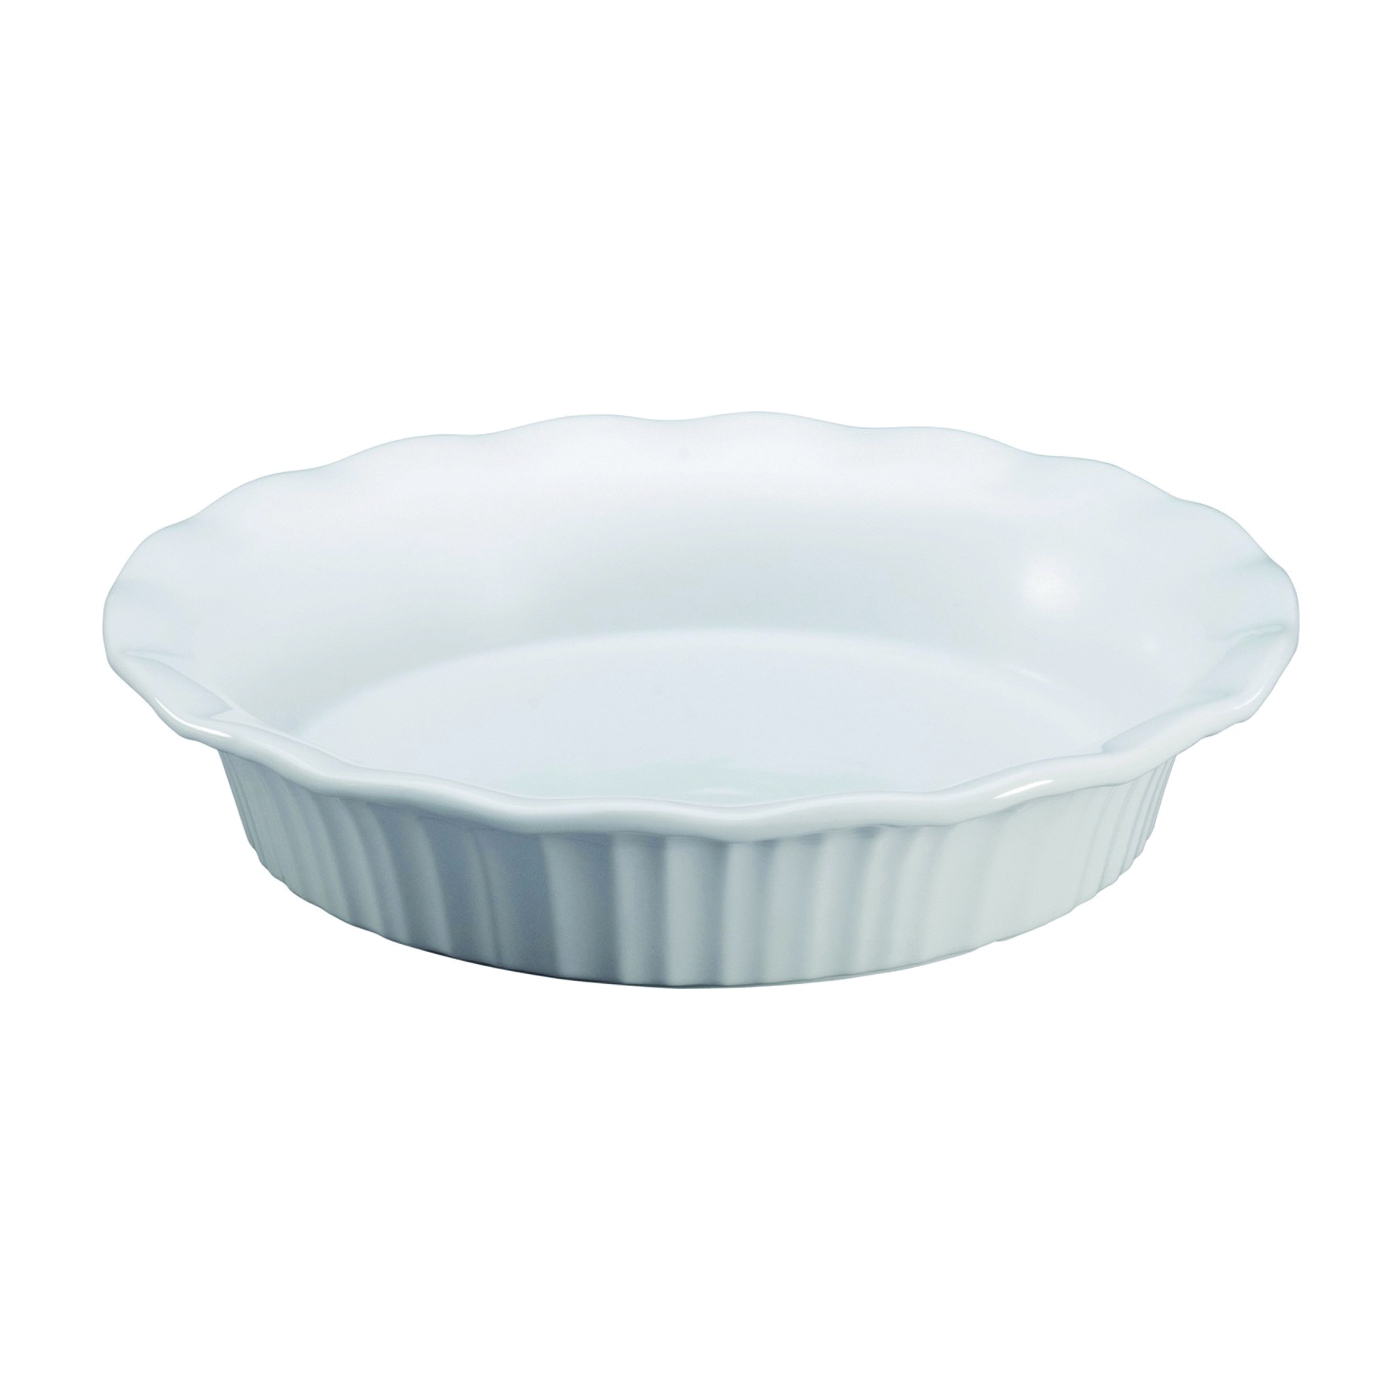 1117314 Pie Plate, Ceramic, French White, Dishwasher Safe: Yes